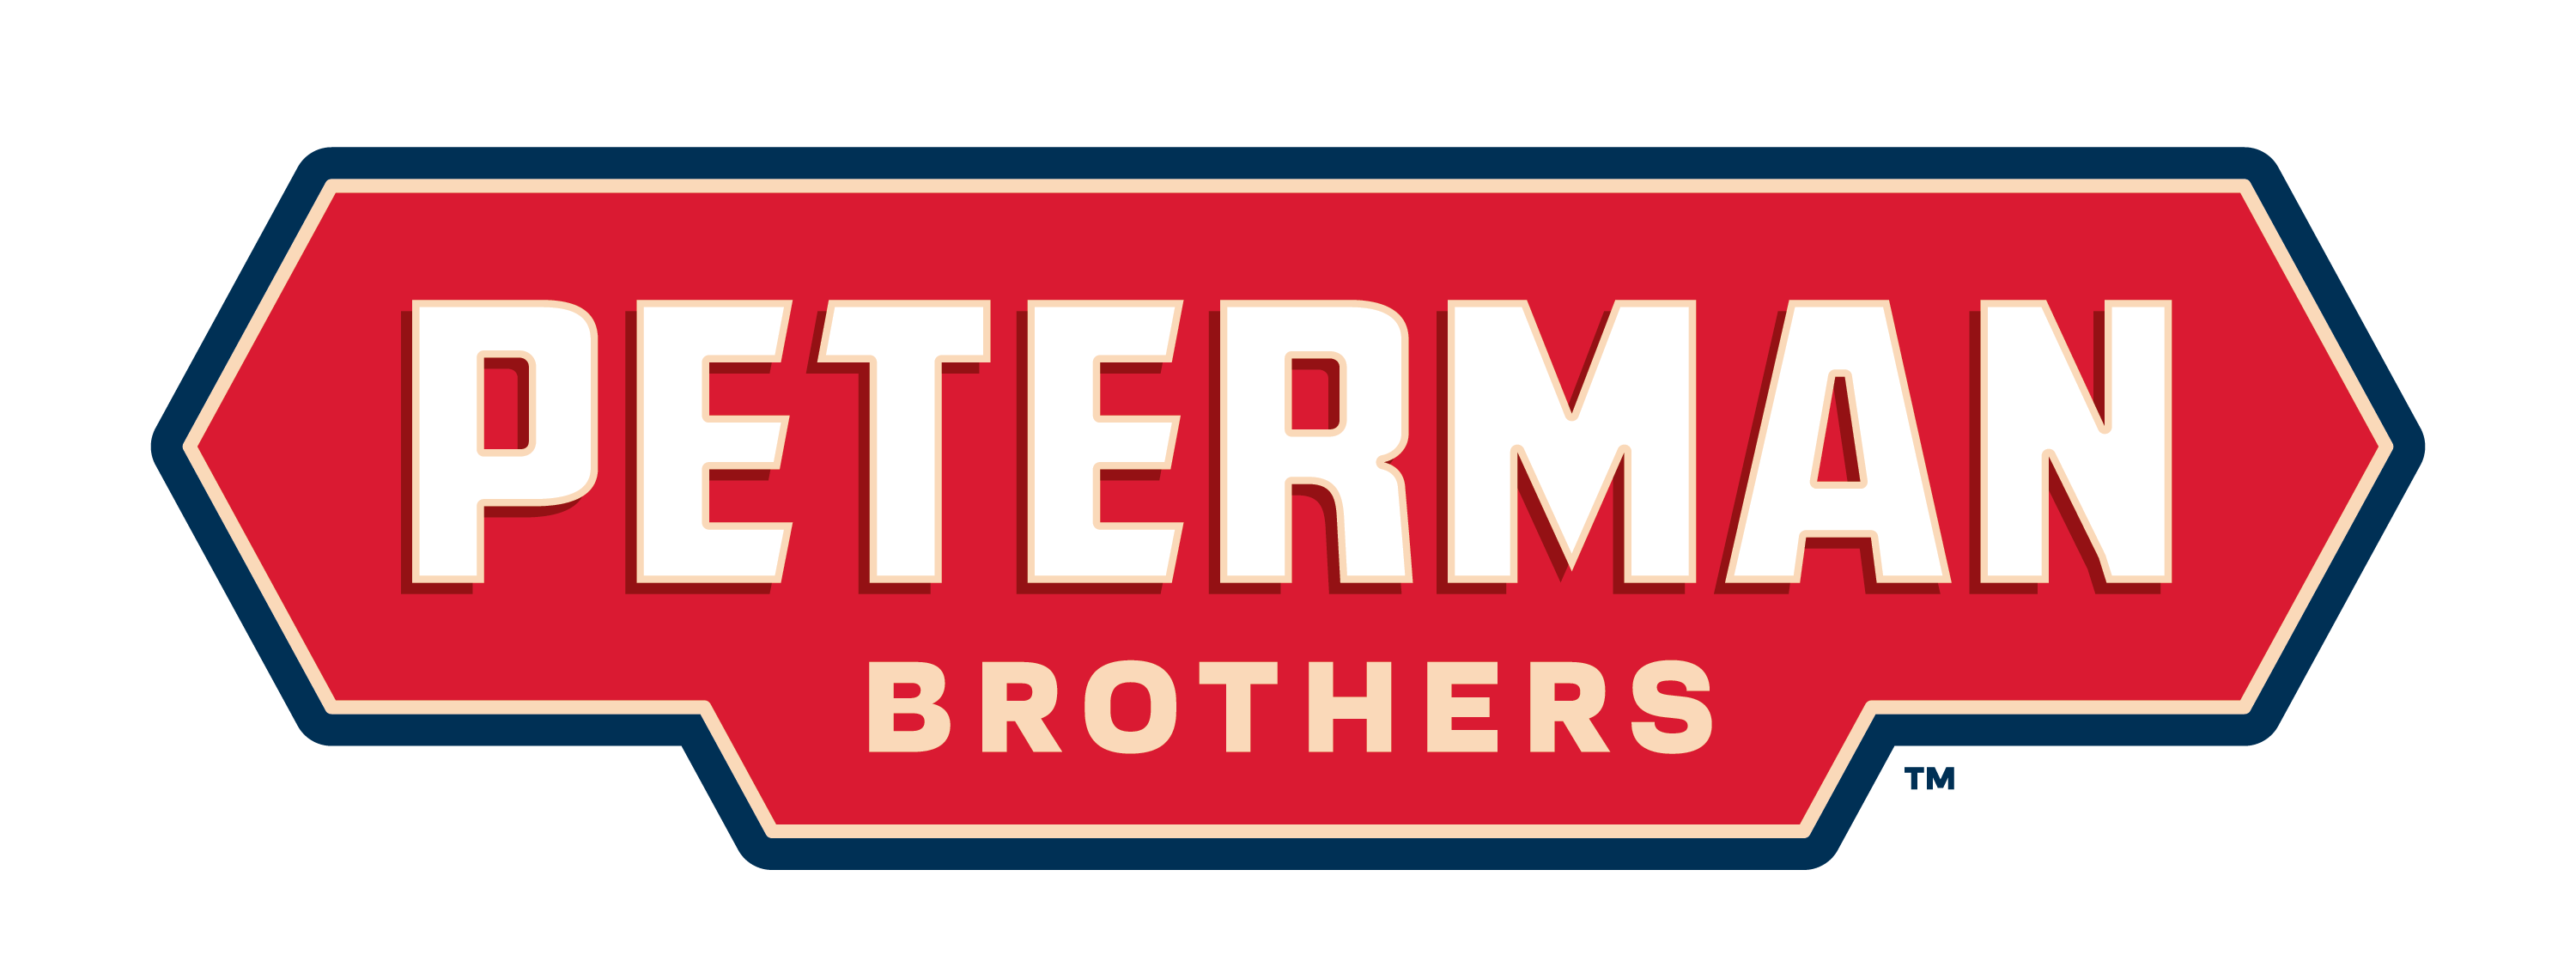 peterman brothers